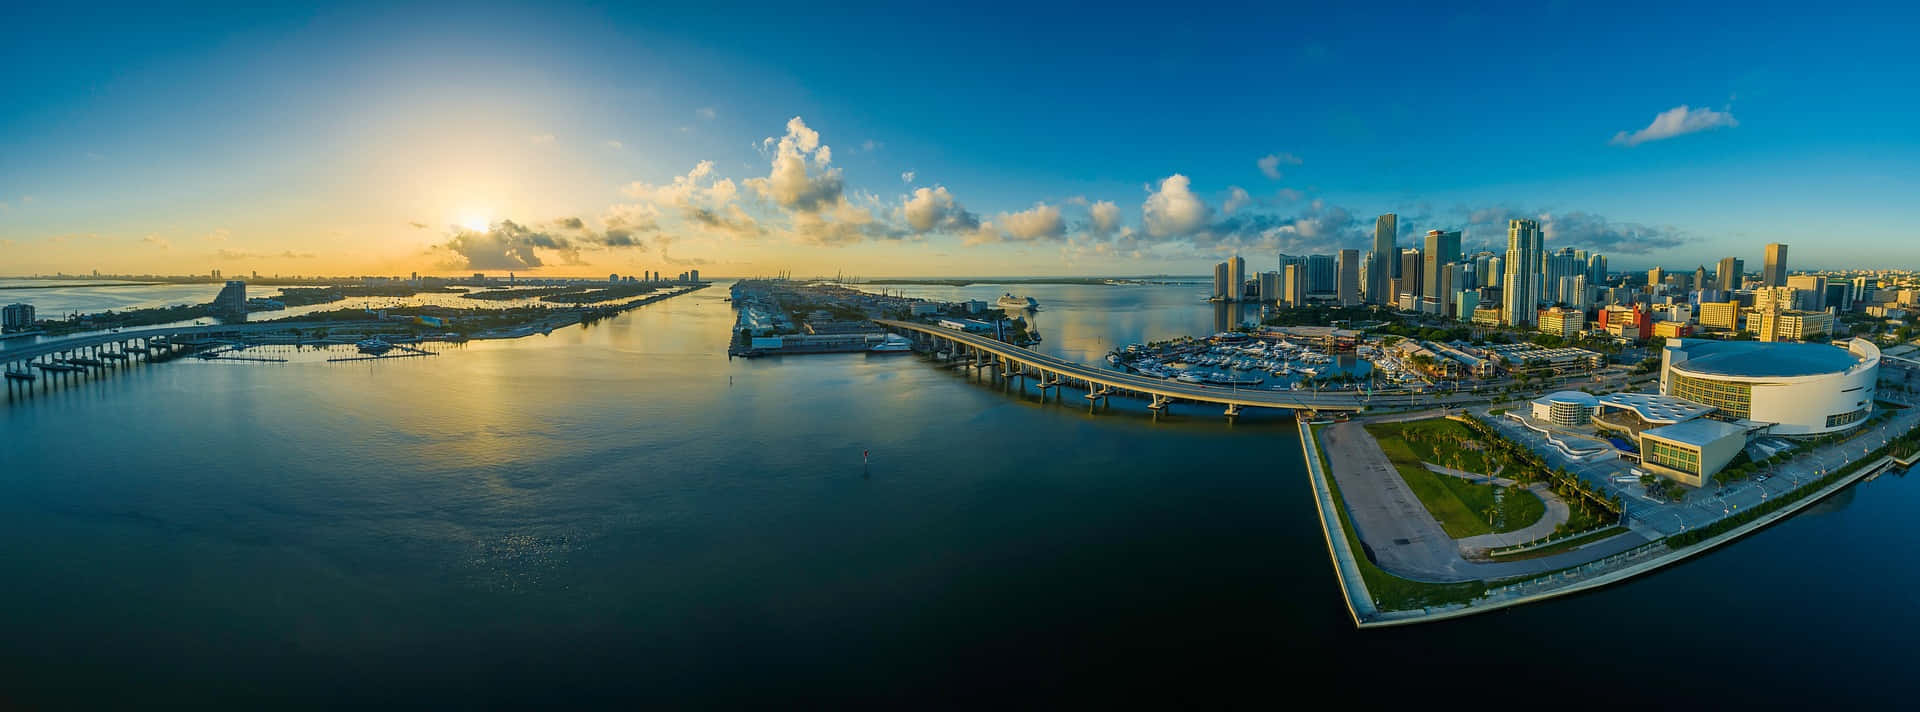 Svalapanoramabild Av Miami City.